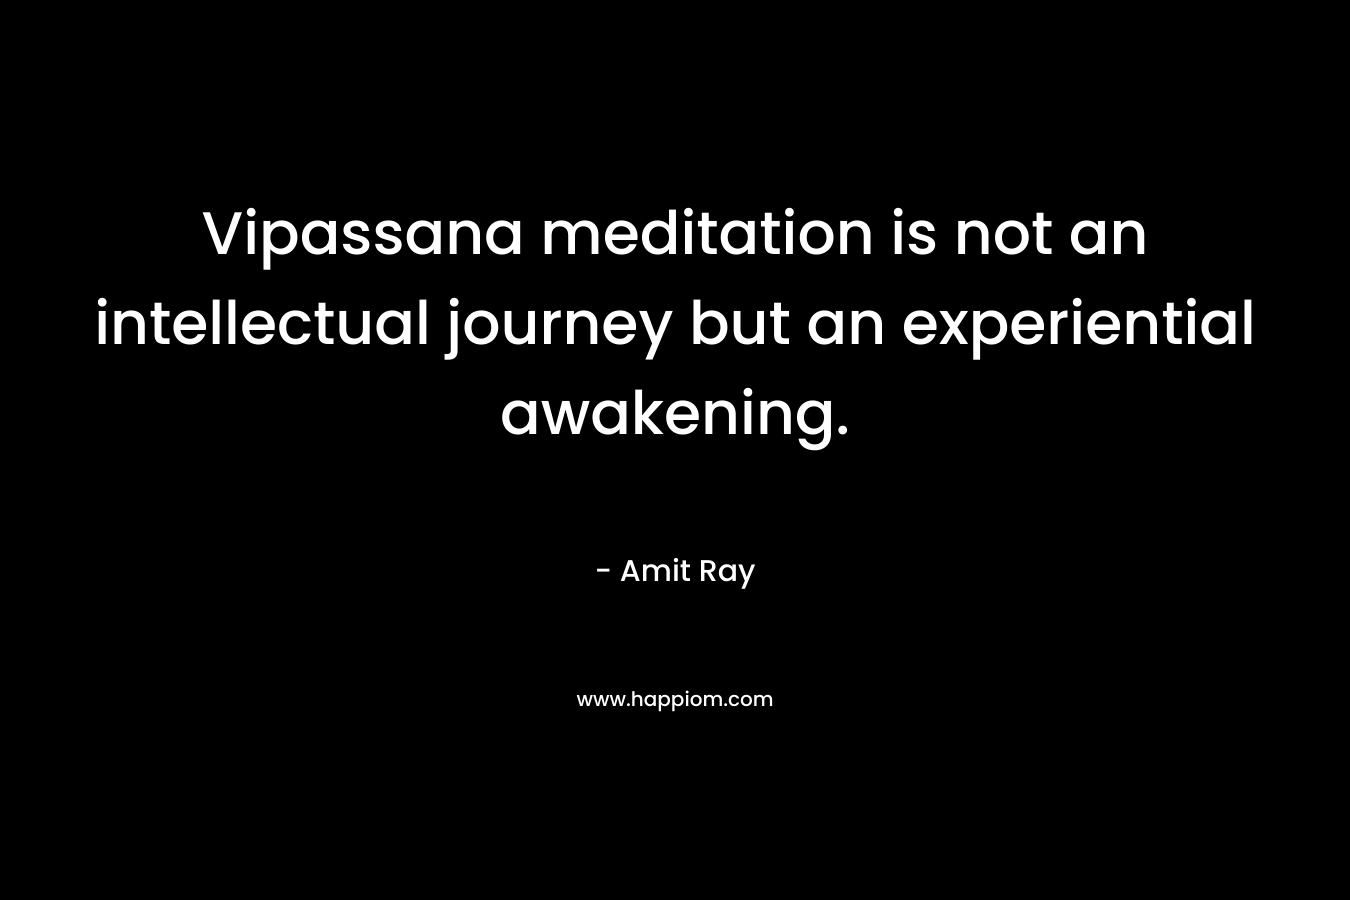 Vipassana meditation is not an intellectual journey but an experiential awakening.